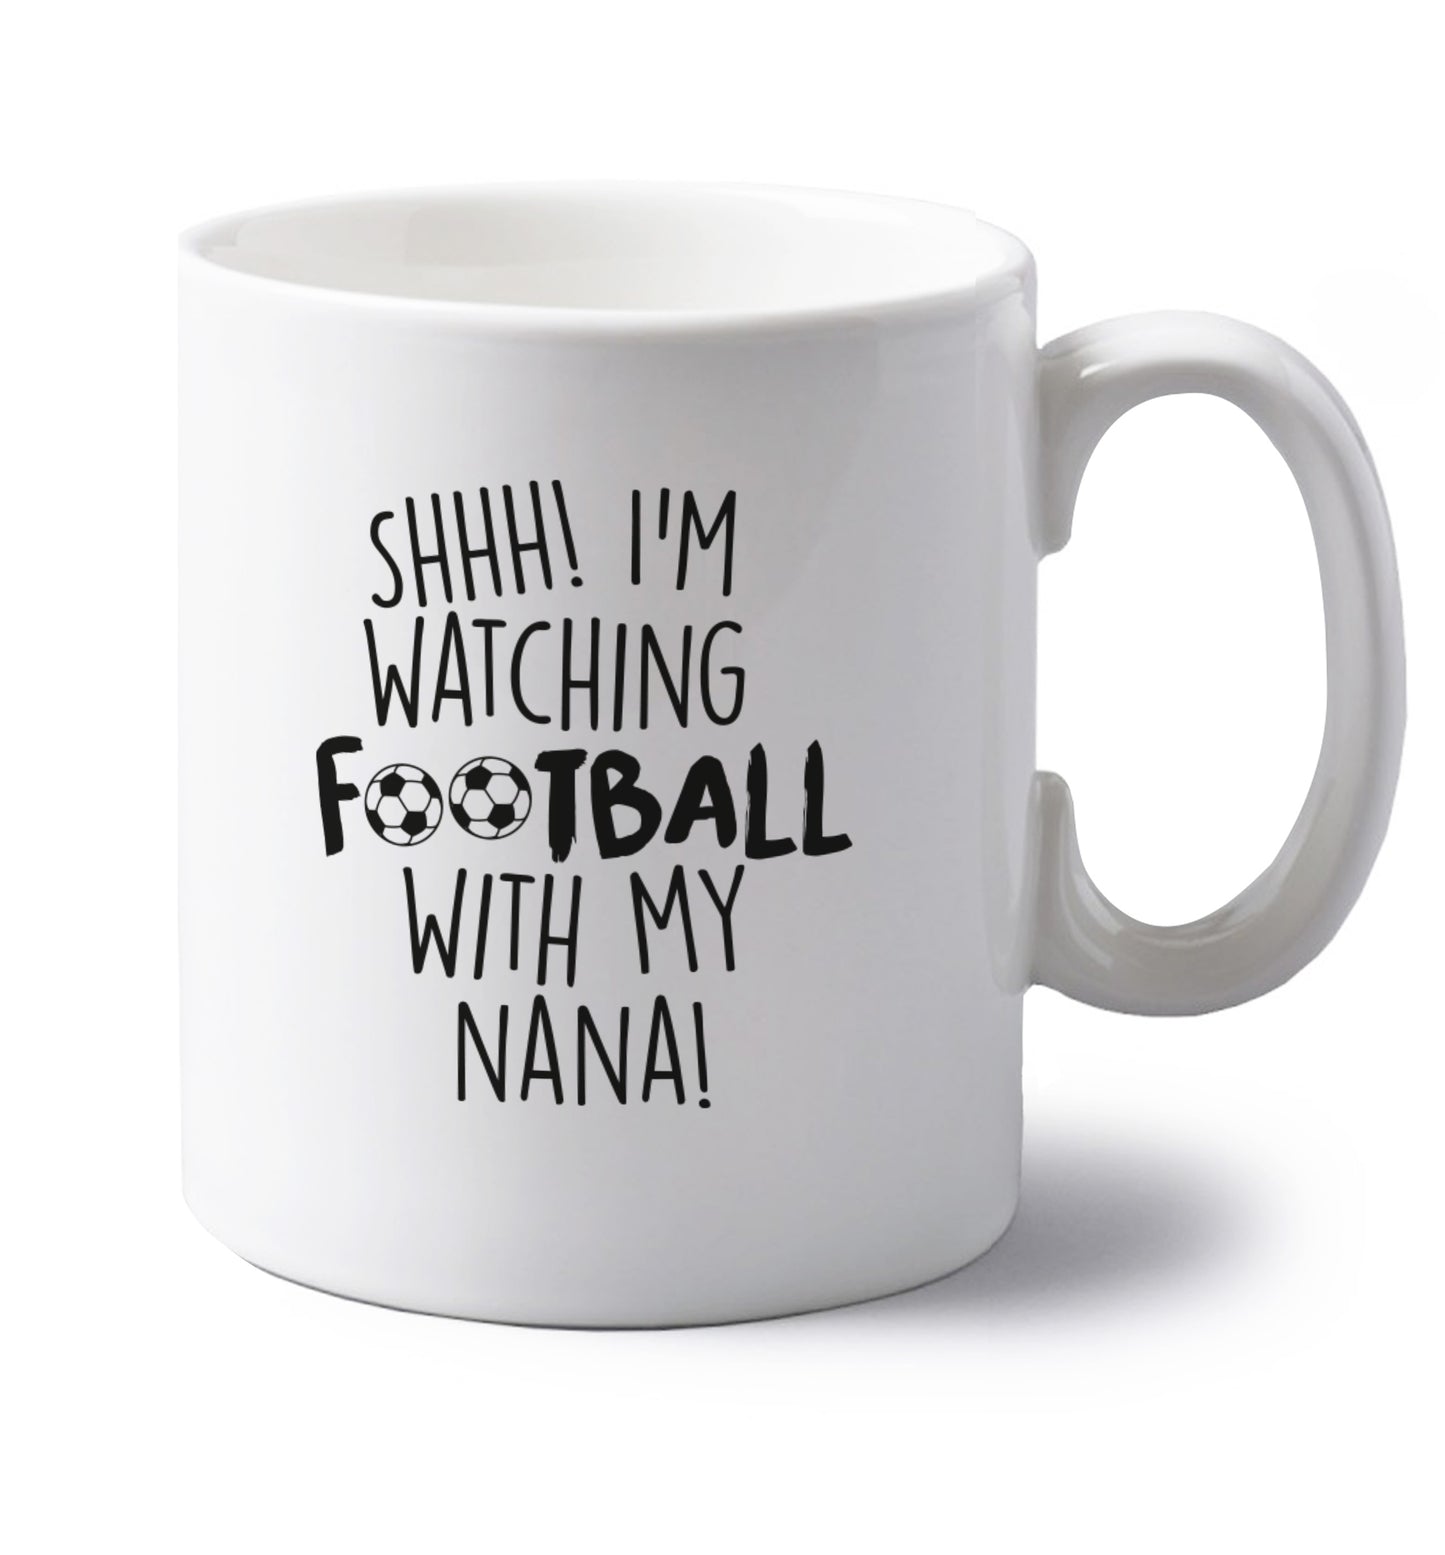 Shhh I'm watching football with my nana left handed white ceramic mug 